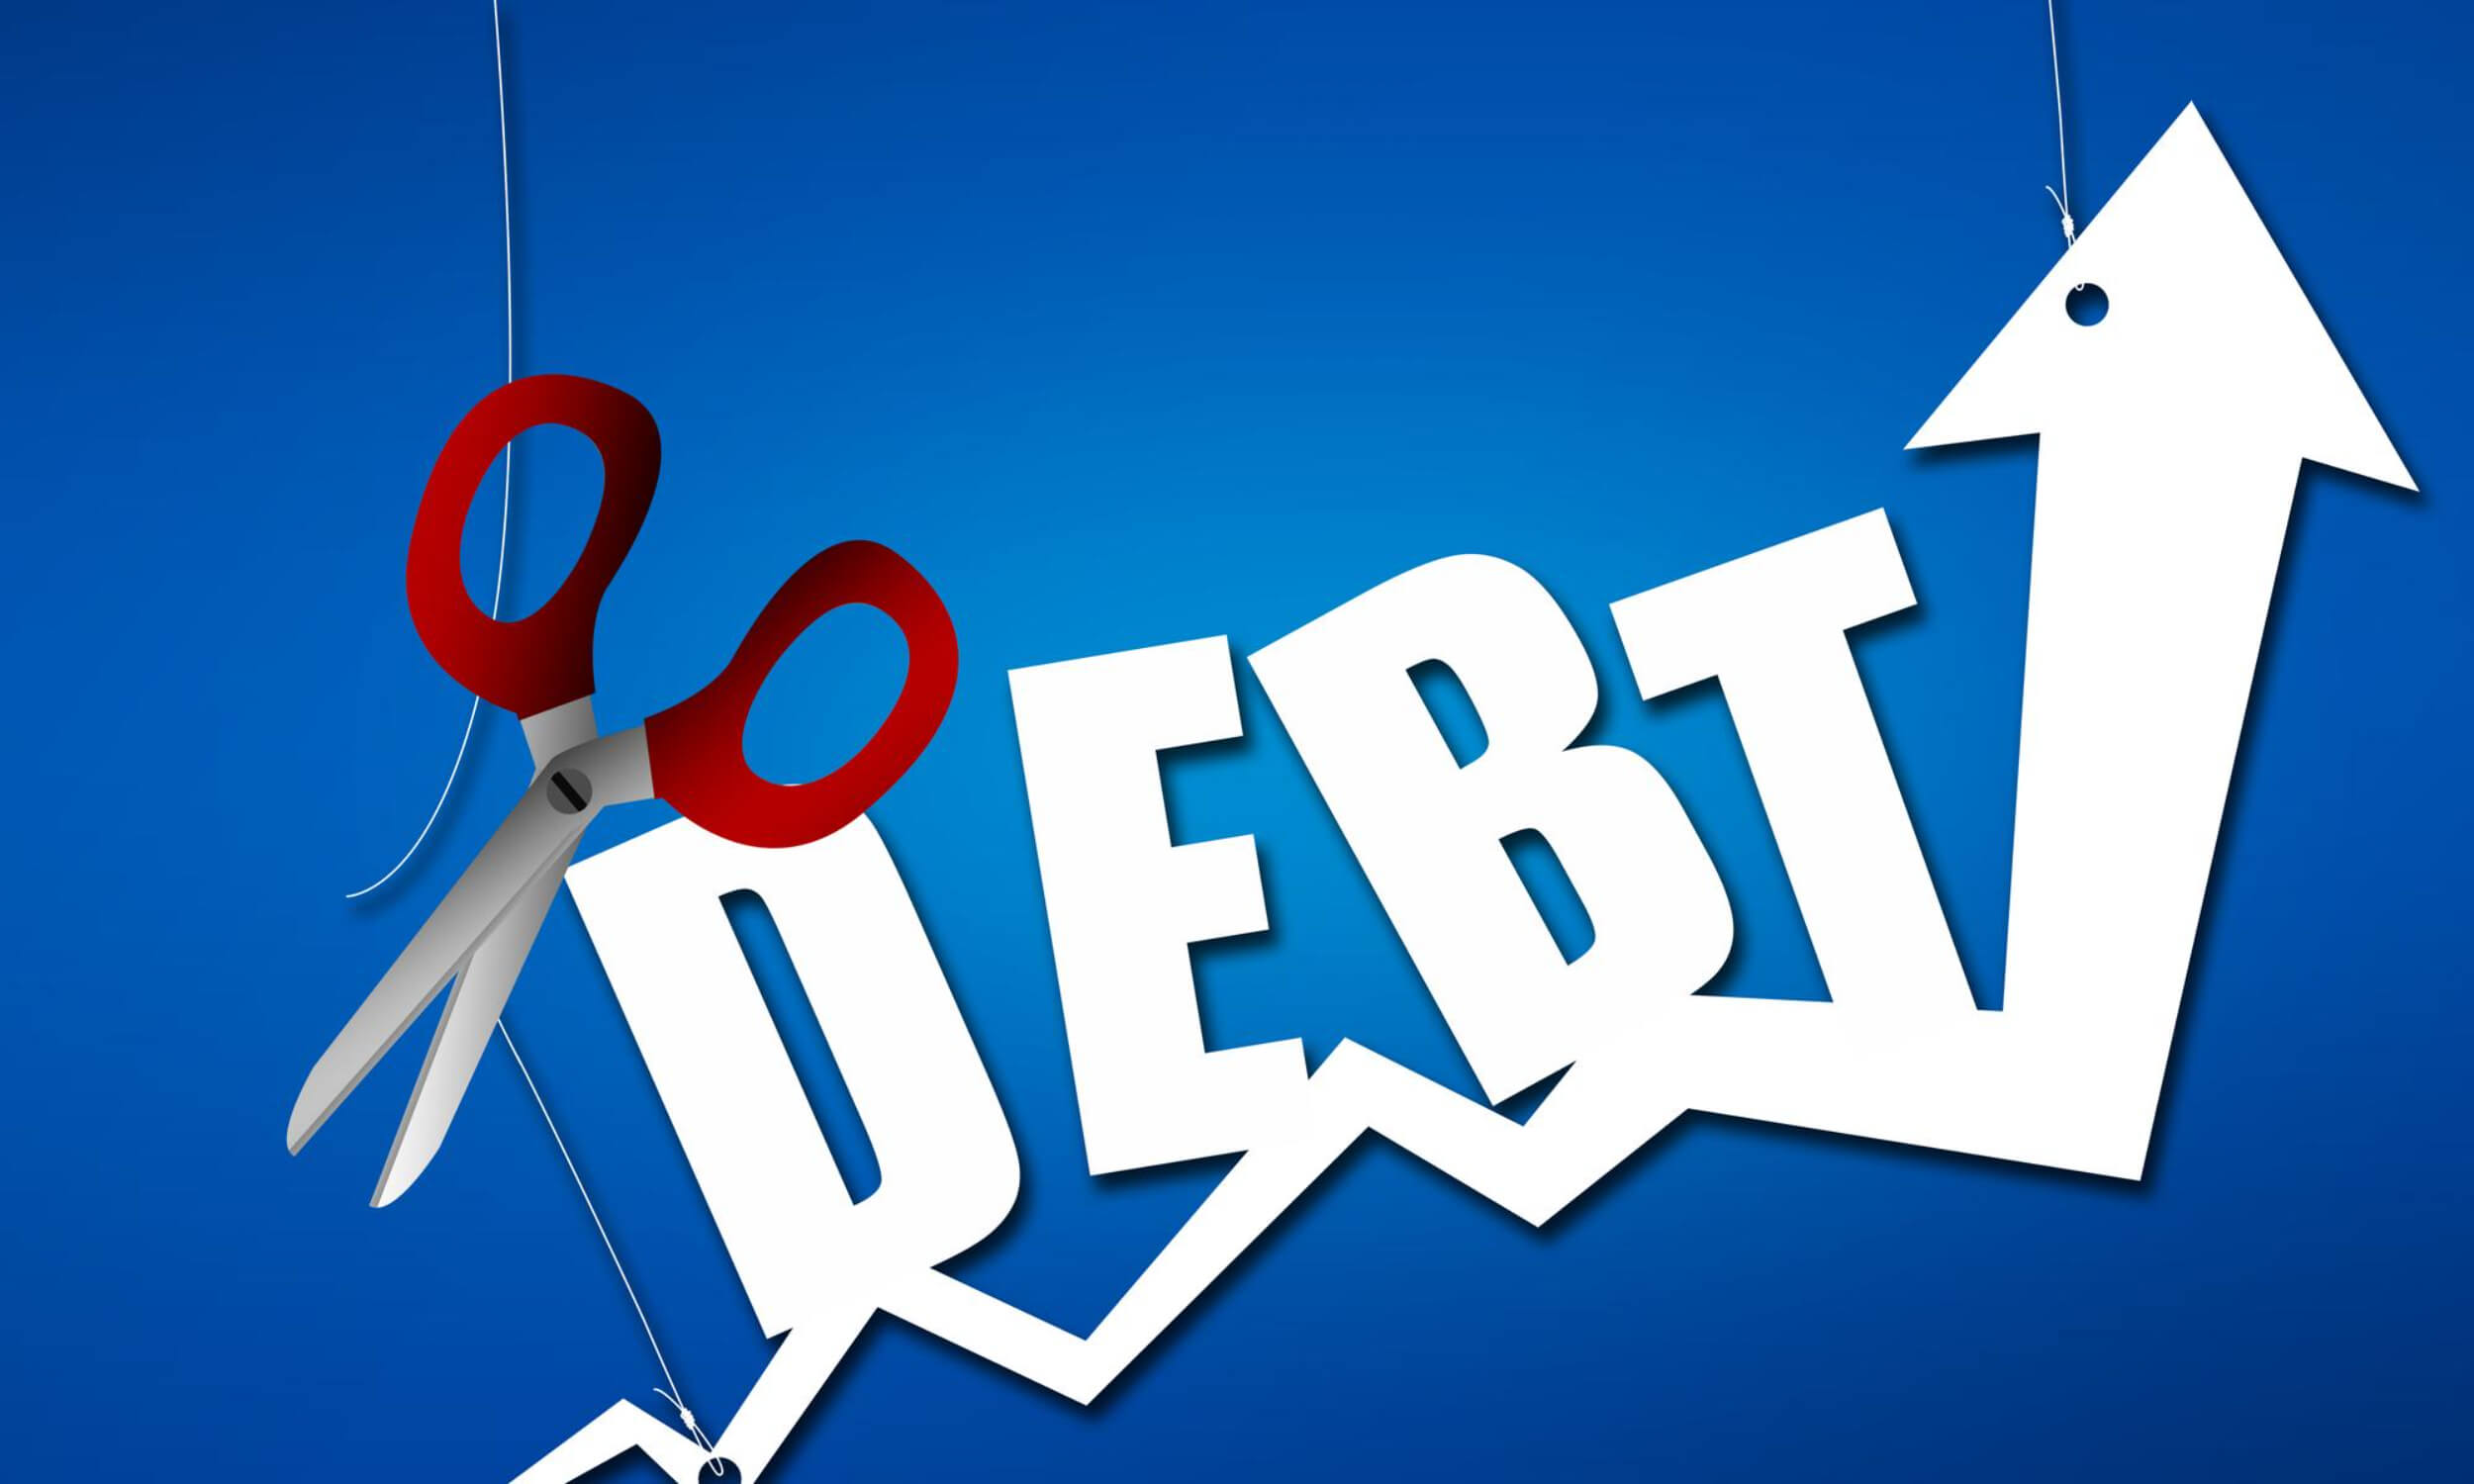 use scissors cut away debt (1)